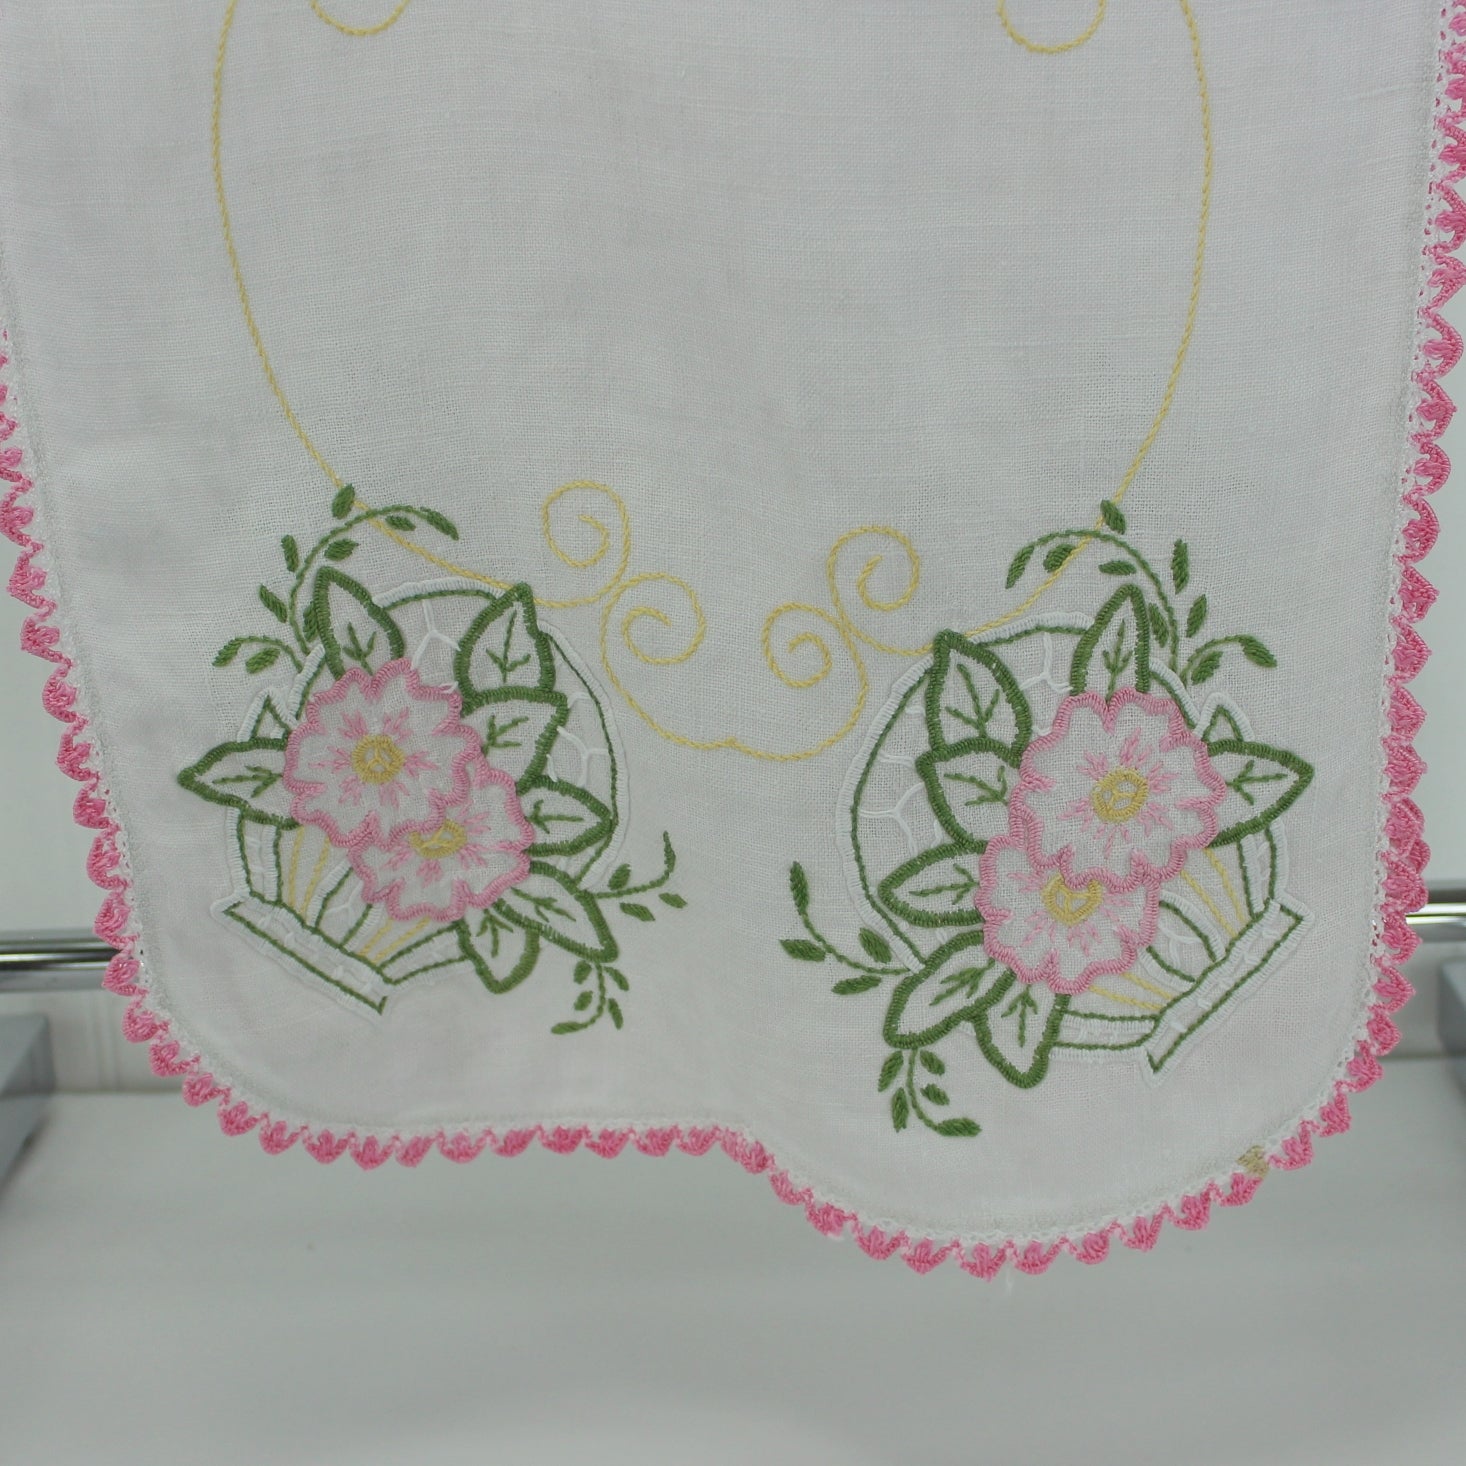 White Linen Table Center Runner Embroidered Flower Baskets Pink Green Crochet Edging cloeup design